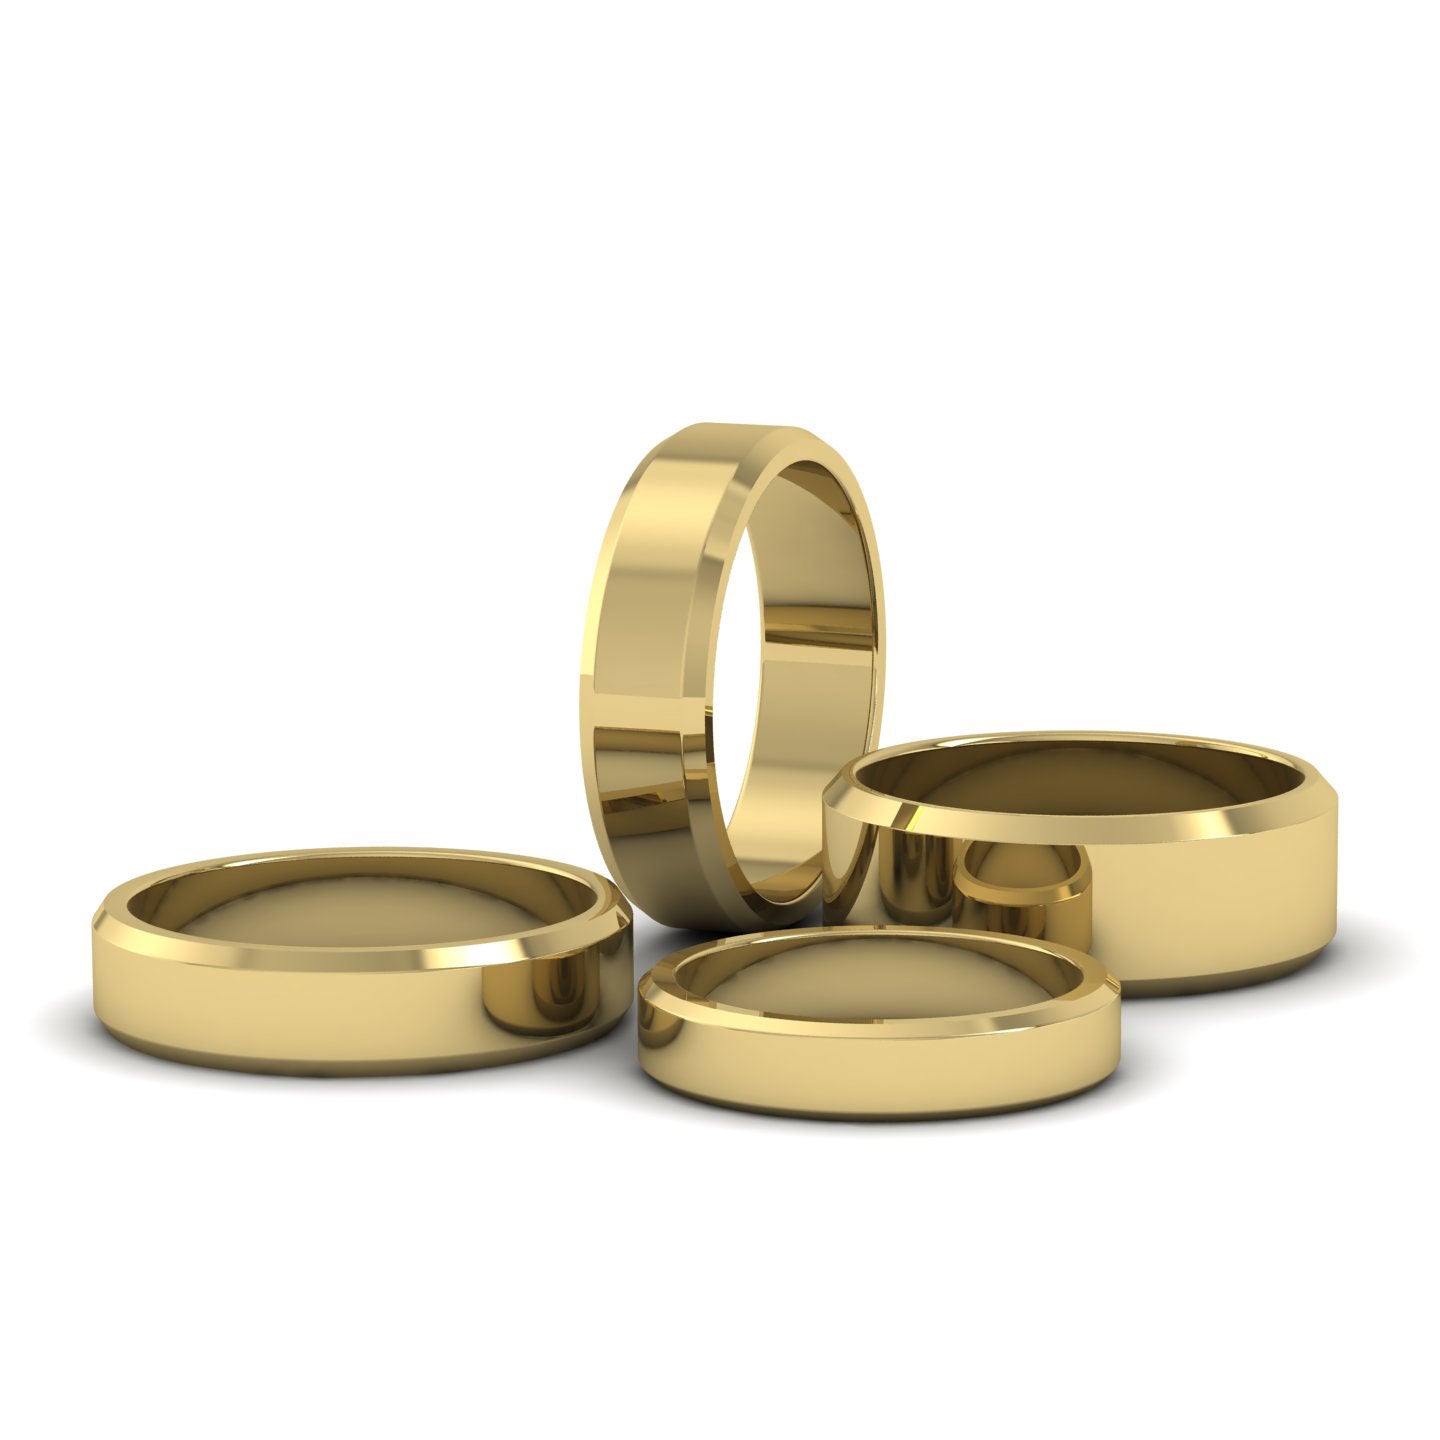 Wear Ring Wedding Ring Love Couple Stock Photo 2295671917 | Shutterstock